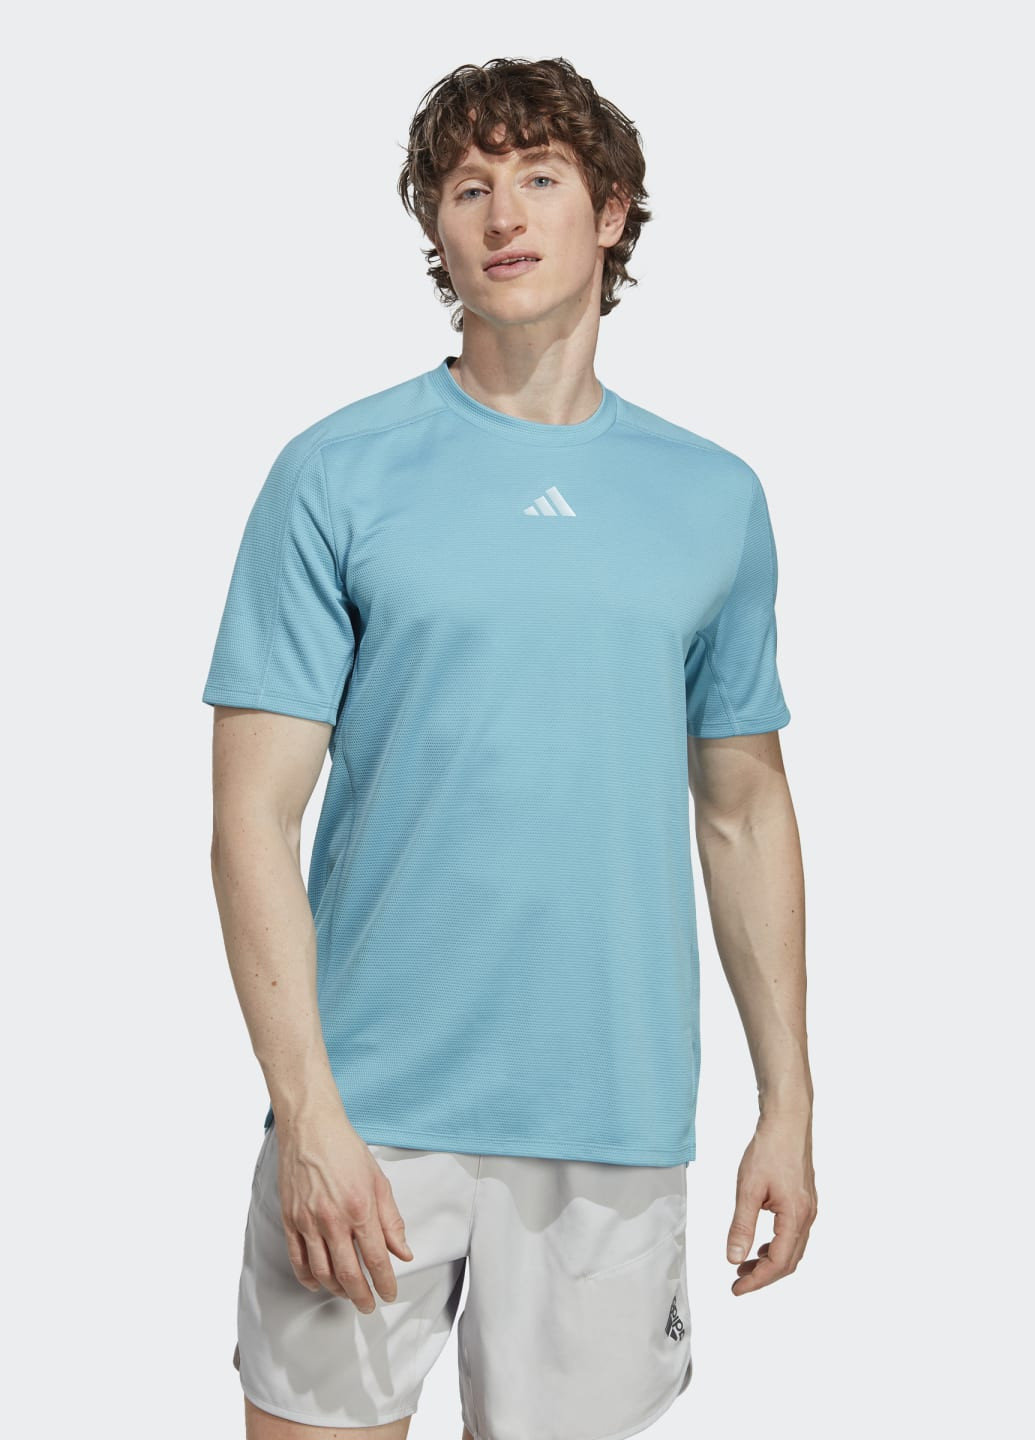 Синяя футболка workout adidas